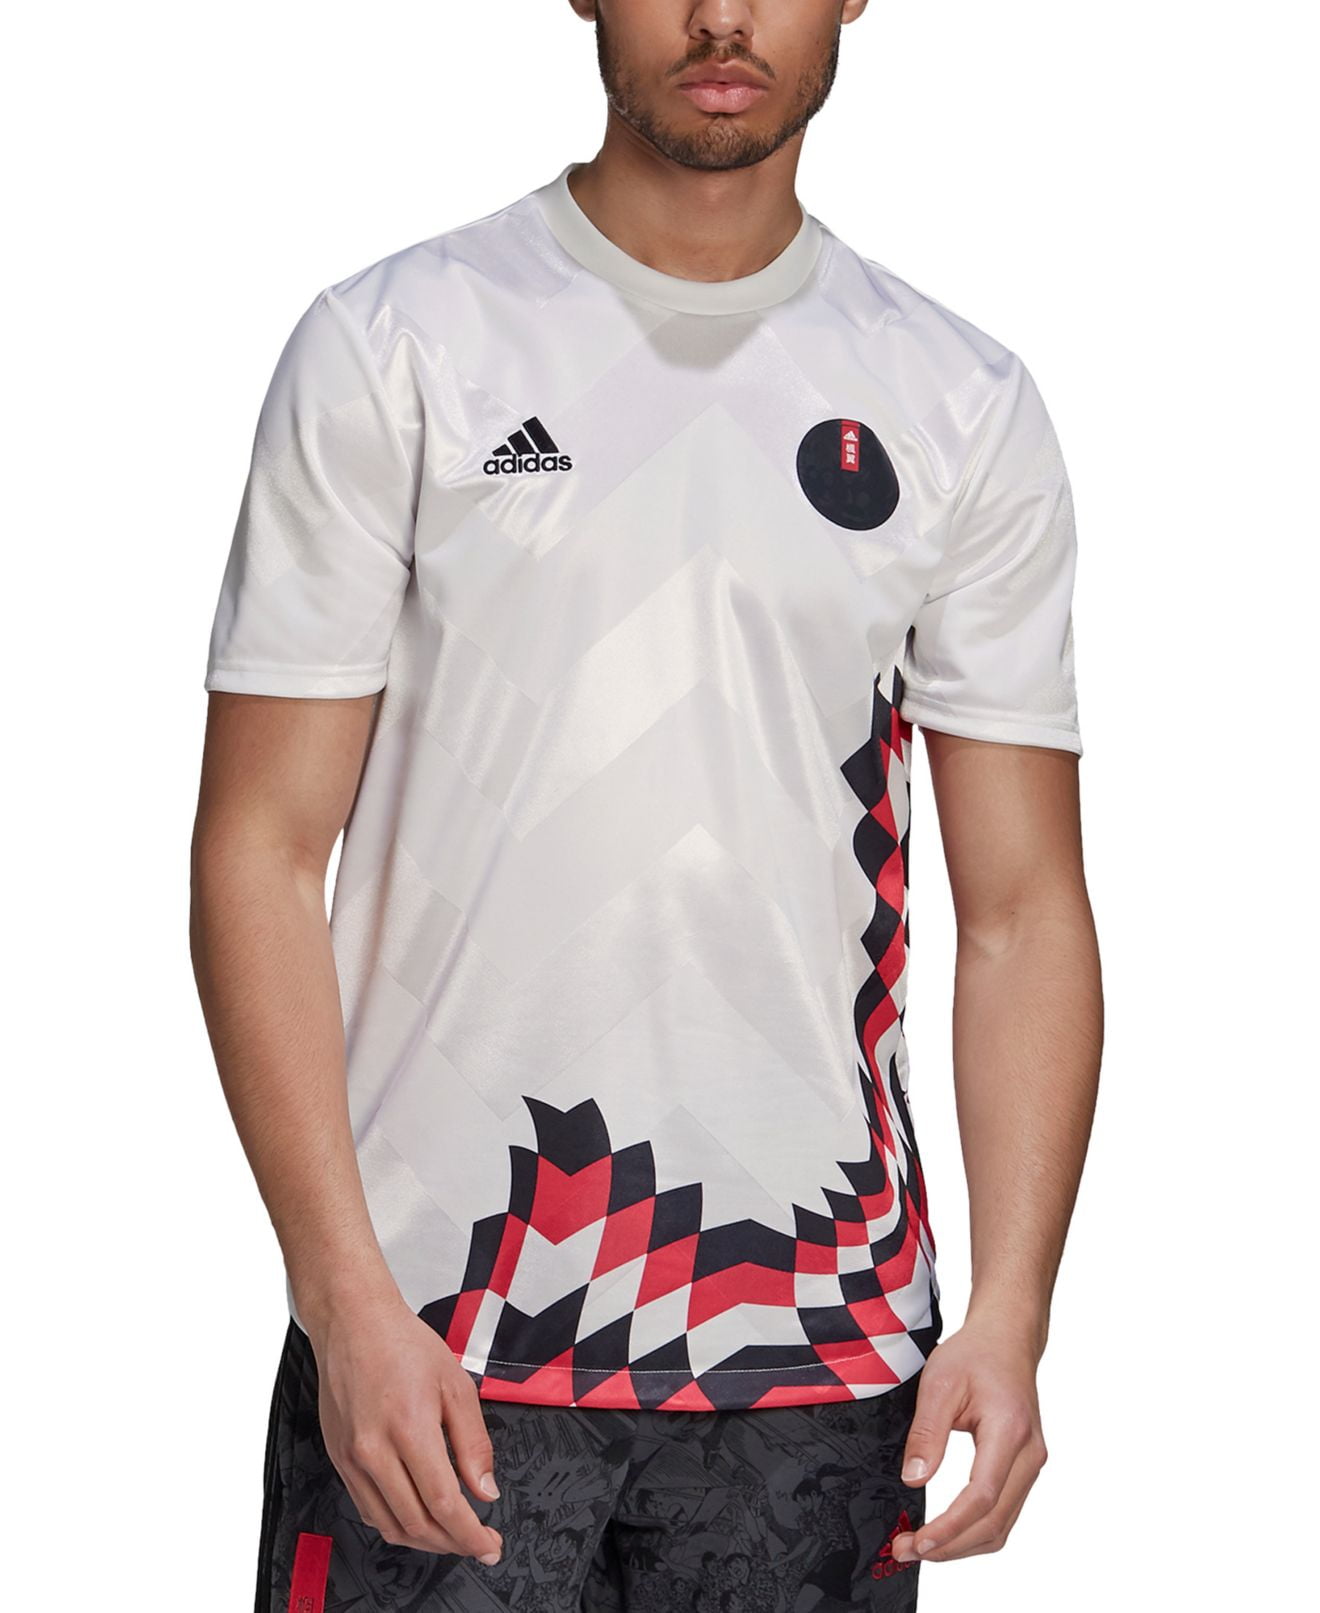 Adidas Mens Athletic Captain Tsubasa Soccer Jersey White 2XL - Walmart.com